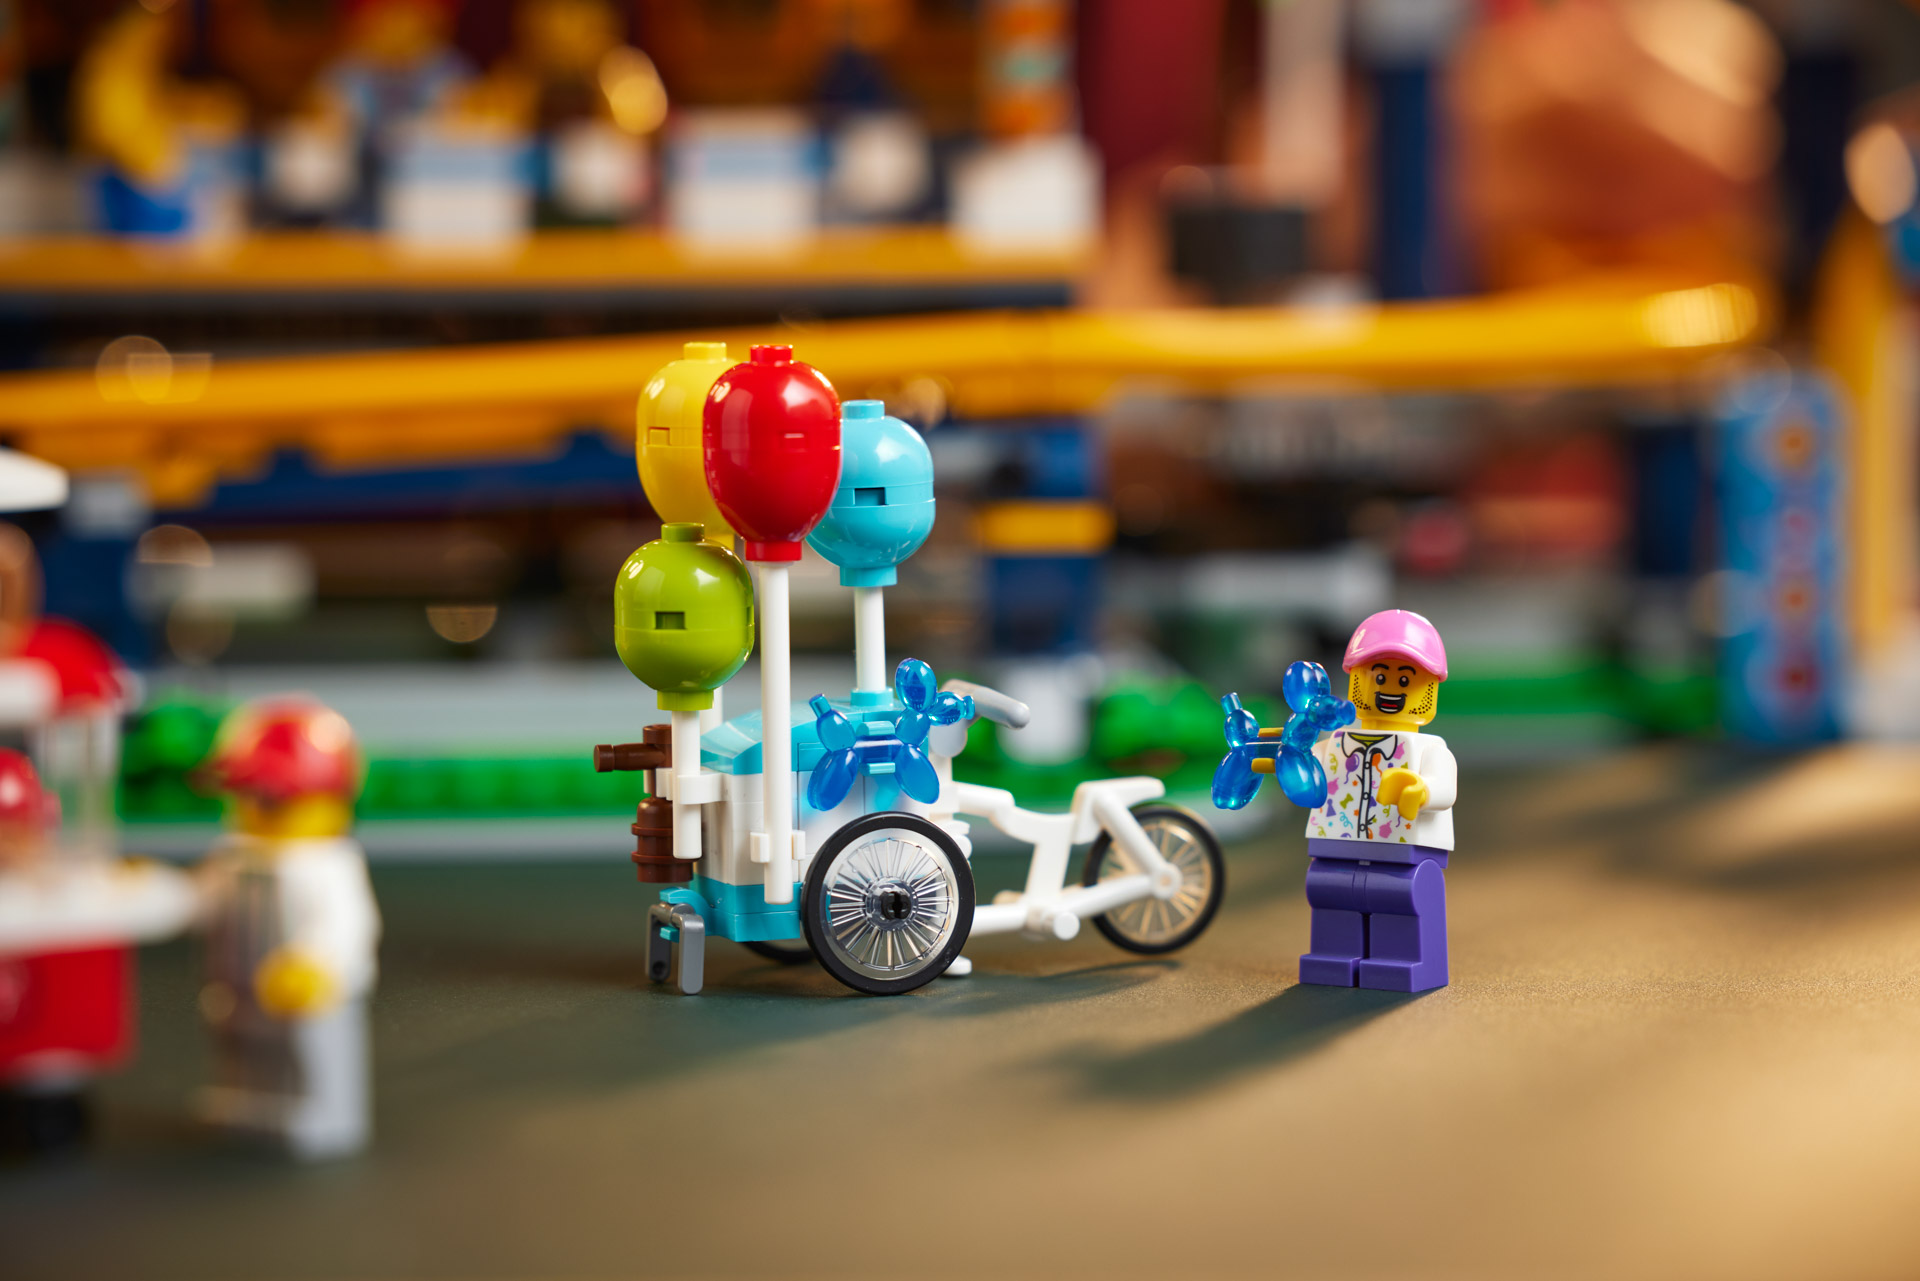 LEGO 10303 - Loop Coaster  - New LEGO Set Announcement Roller Coaster